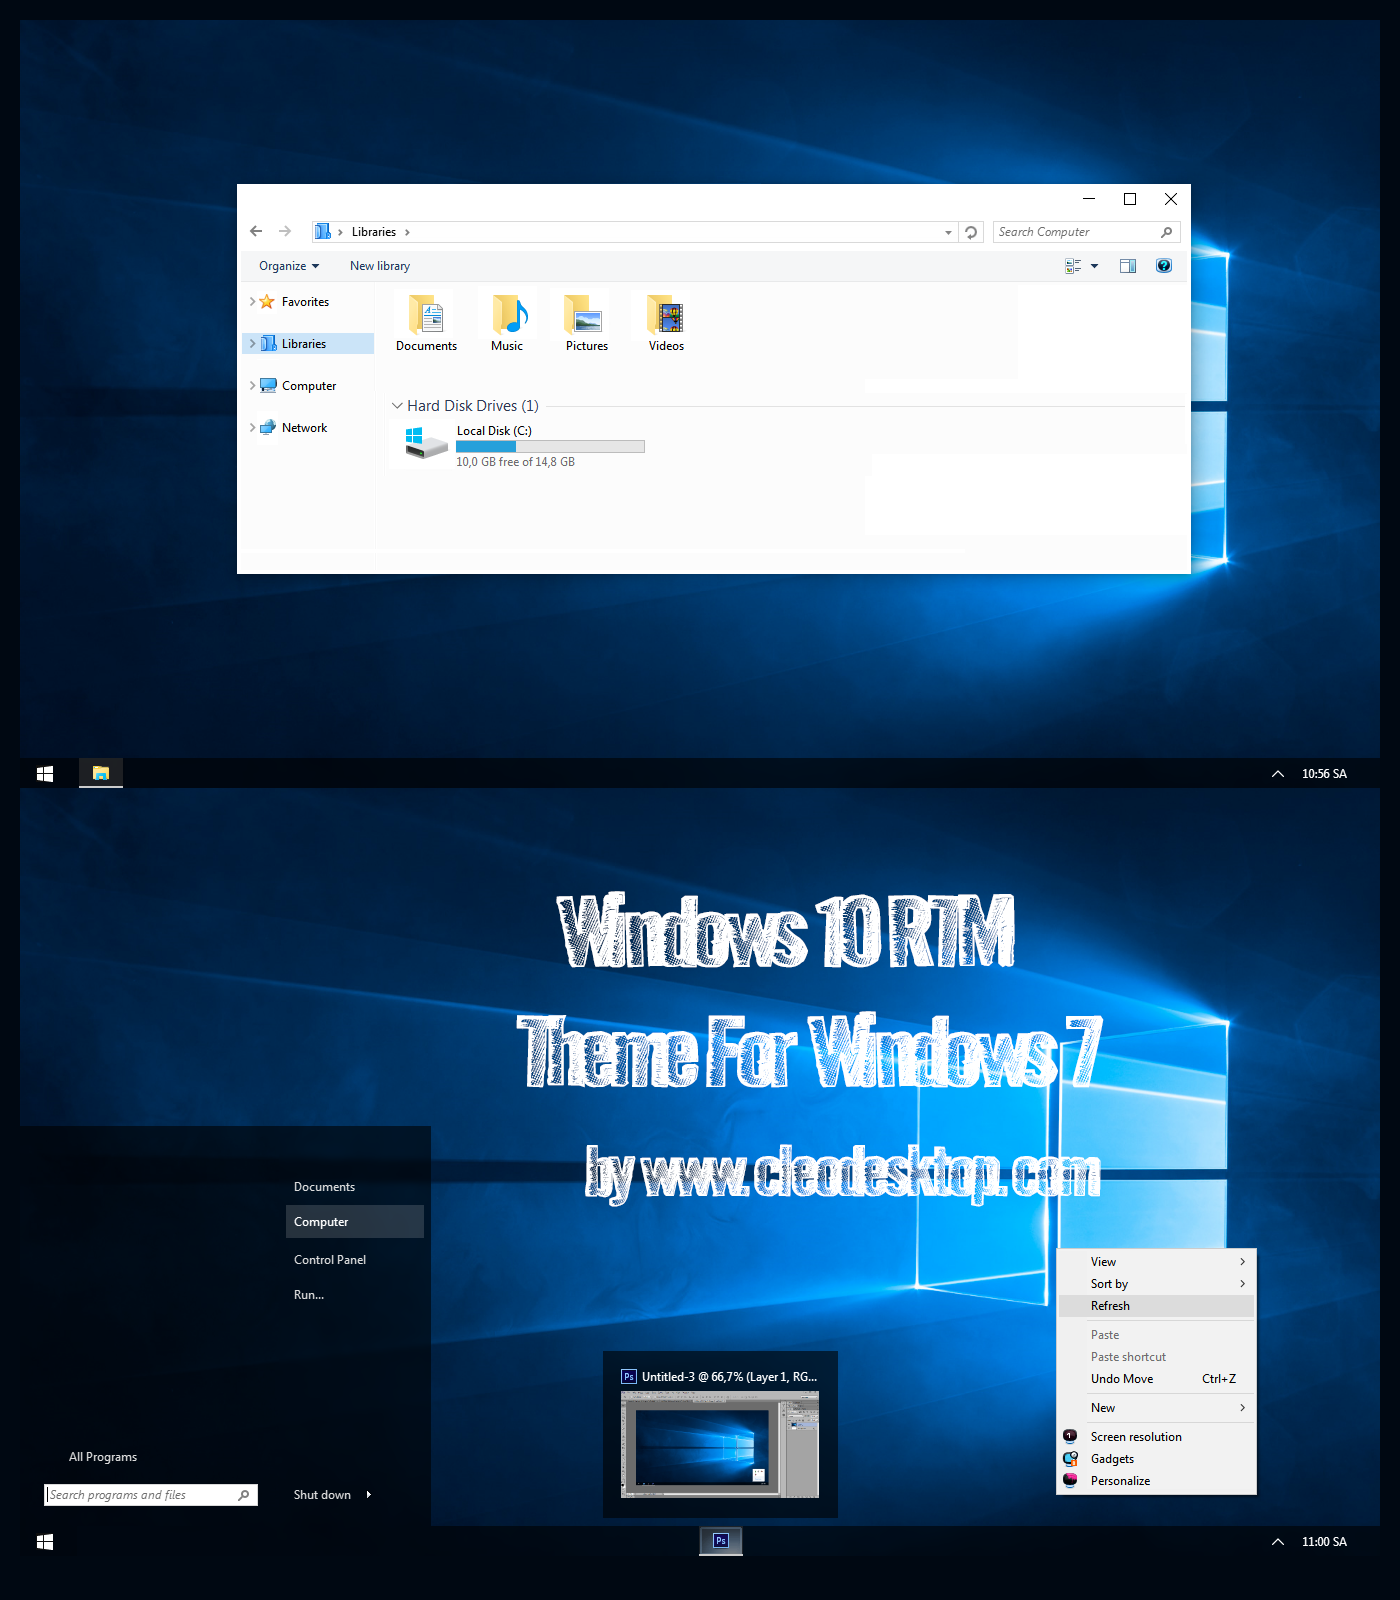 Nile theme for windows 7 by GachaMax3289 on DeviantArt